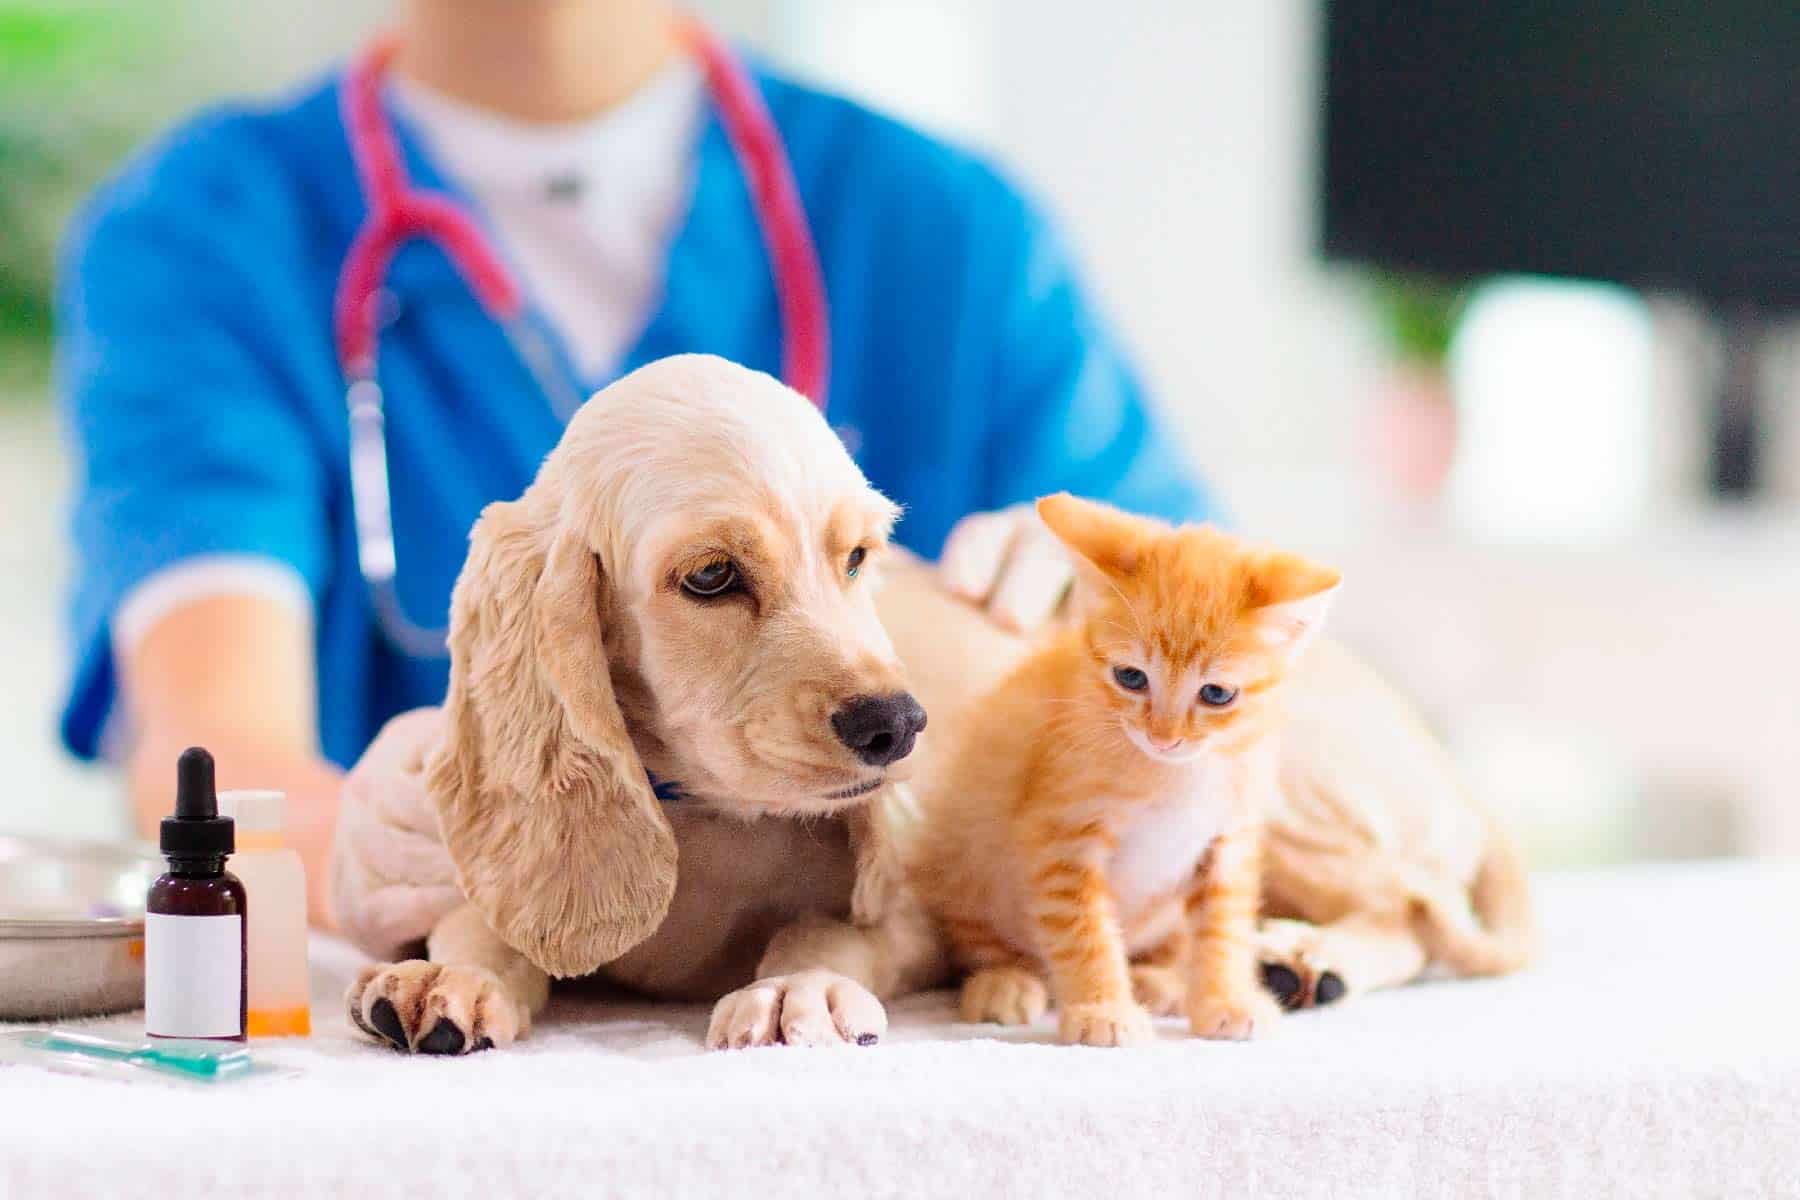 Promueven la asistencia veterinaria gratuita